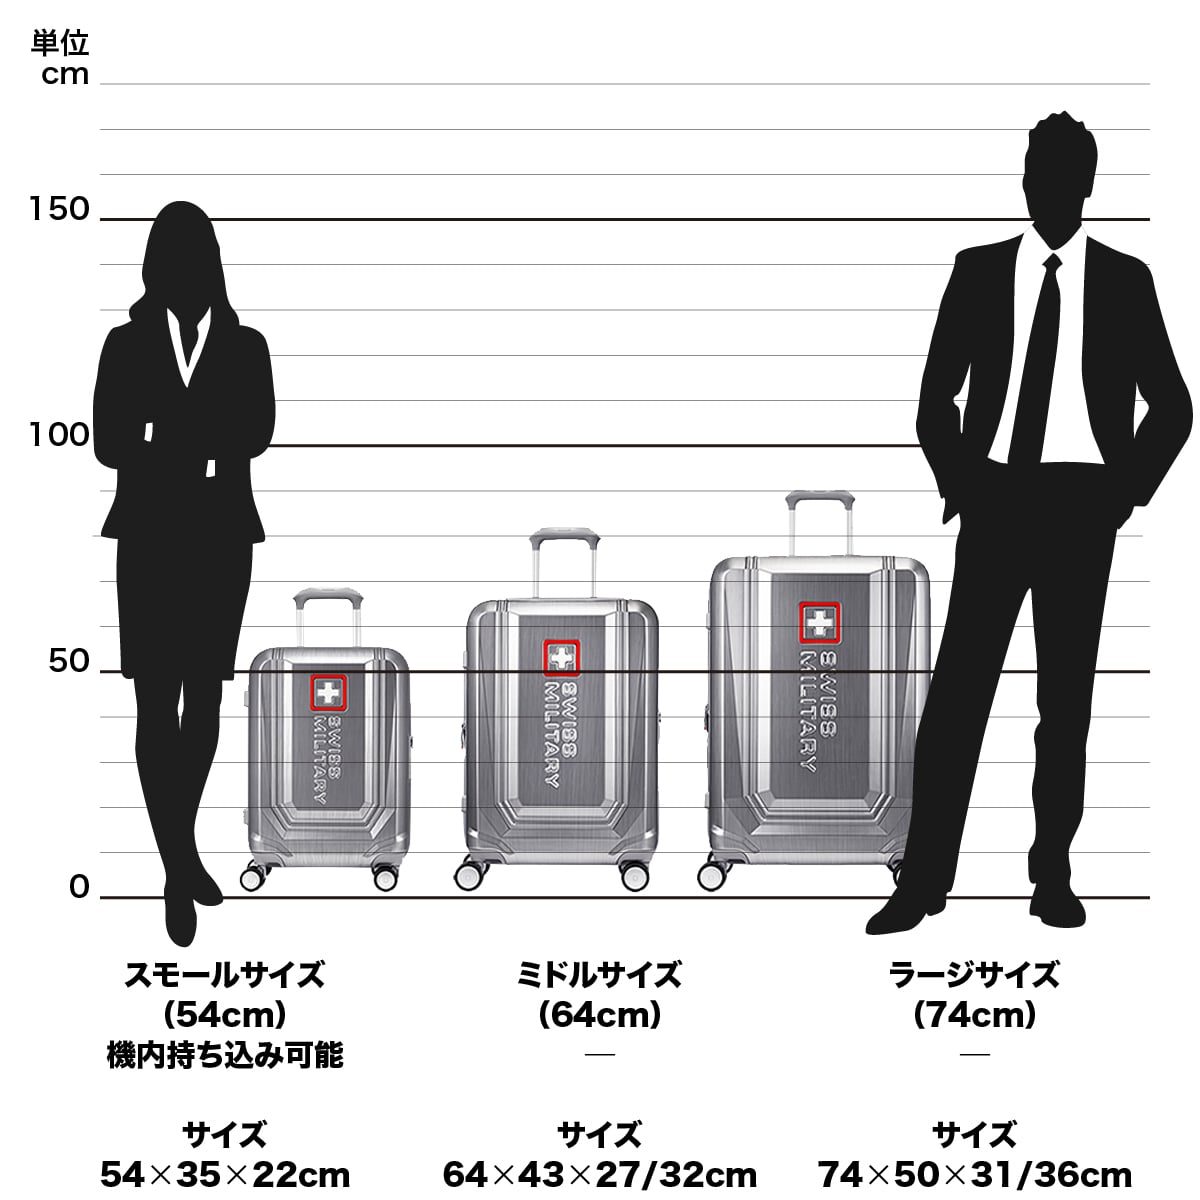 【Web限定モデル】 スーツケース Mサイズ 4～6泊 64cm 68/81L 5cm拡張 TSAロック BROQUEL(ブロッケル) チタングレー  SM-Z924-TG